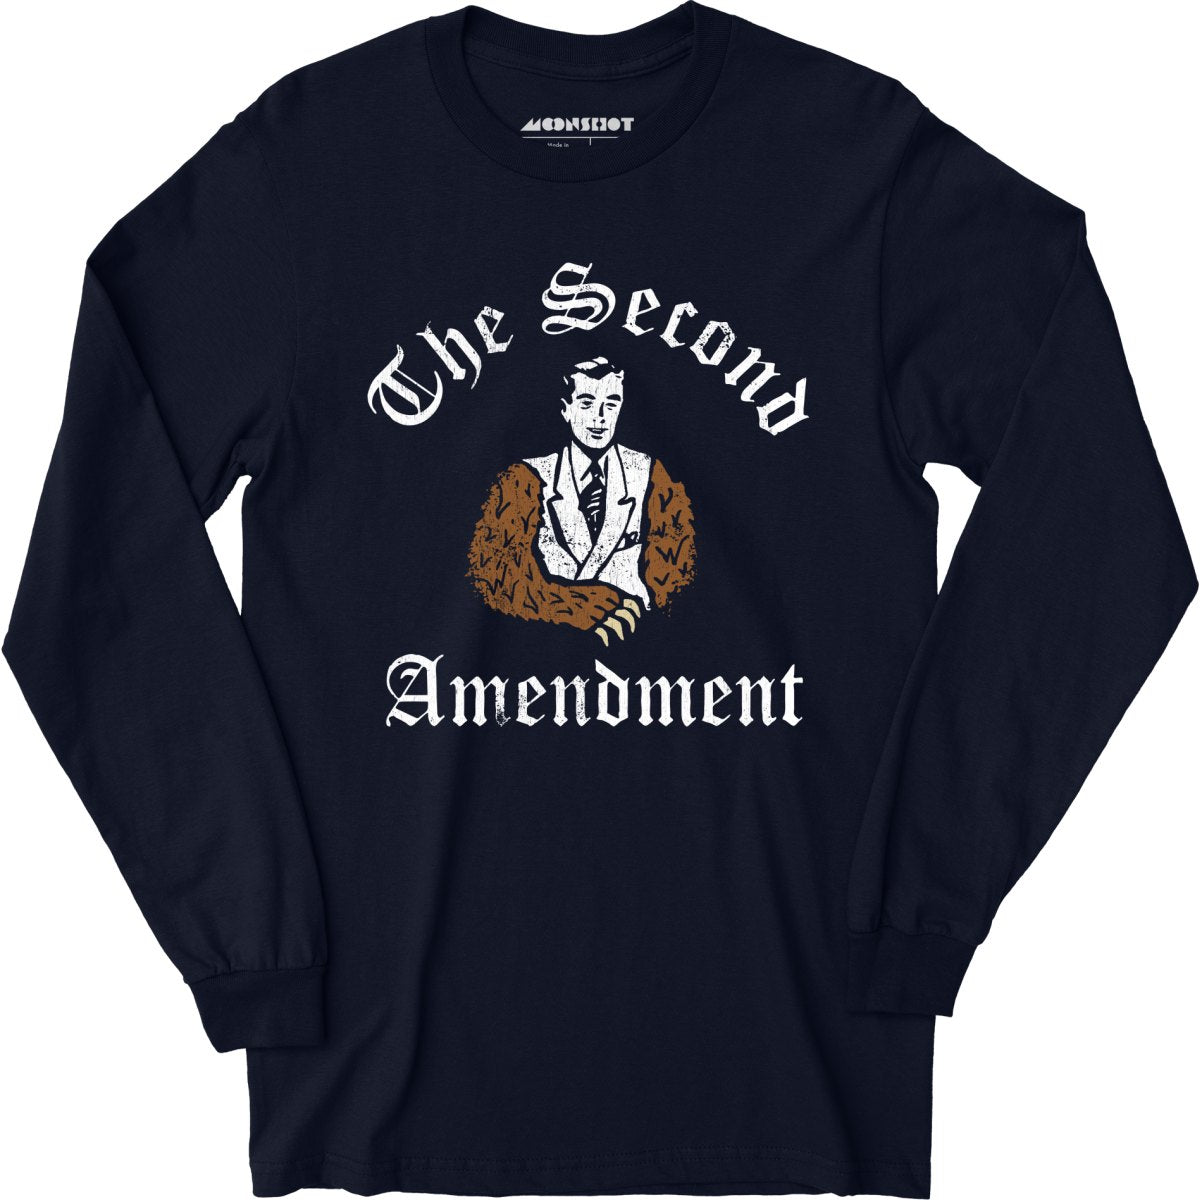 2nd Amendment - Right to Bear Arms - Long Sleeve T-Shirt